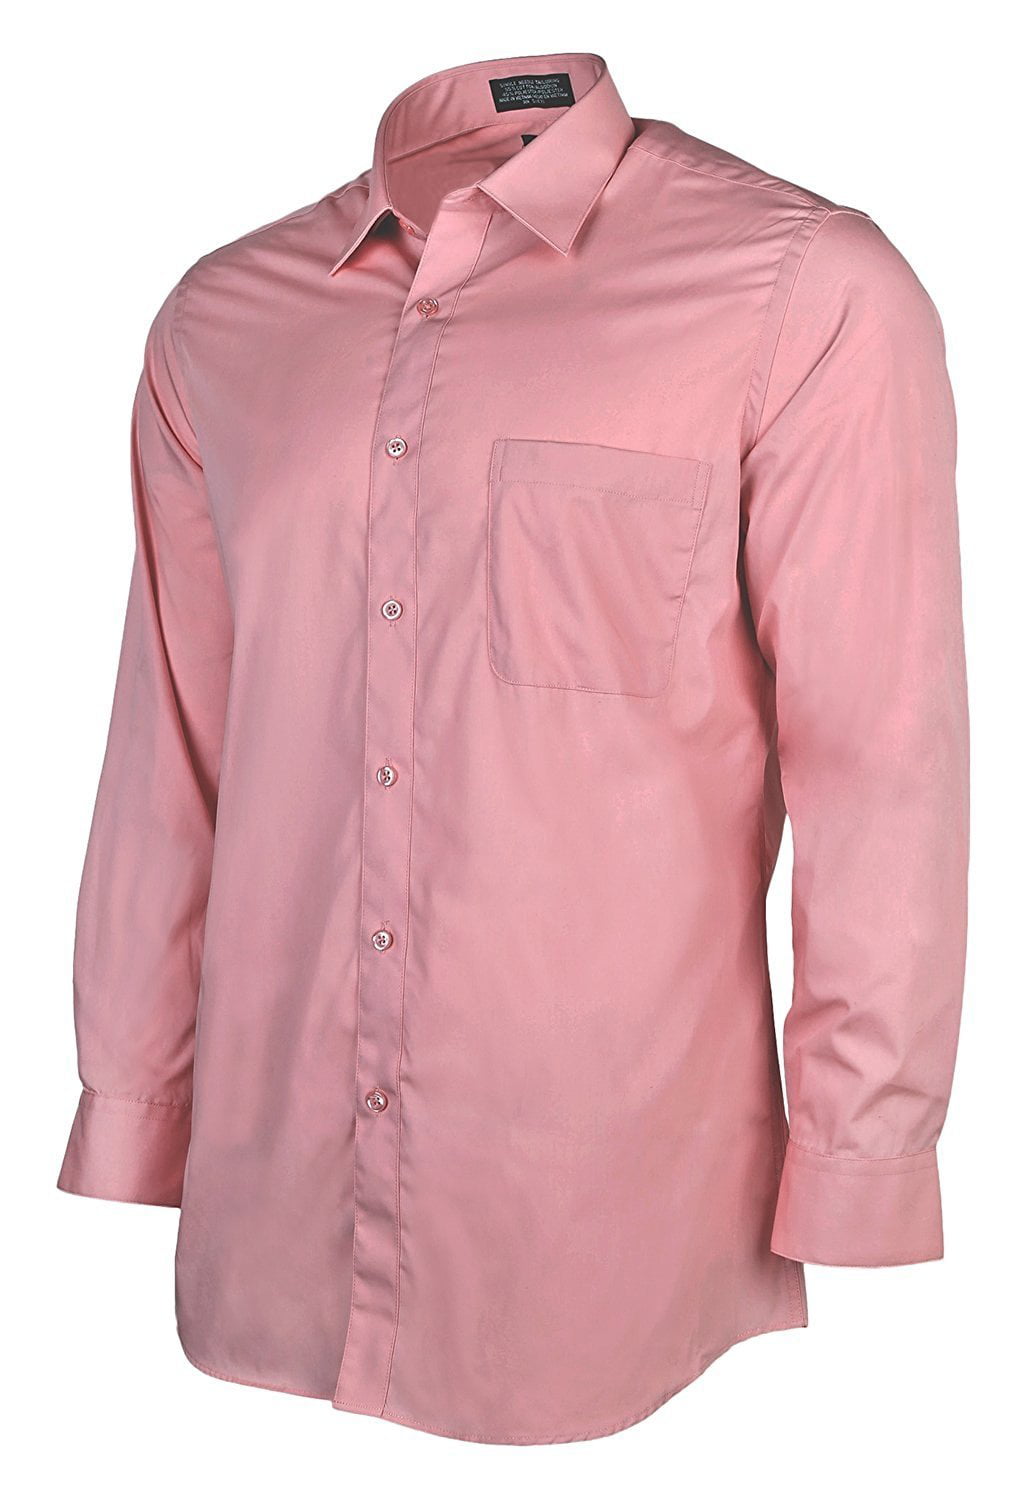 Marquis 009SL Men's Long Sleeve Slim Fit Solid Dress Shirt - Dusty Rose - 